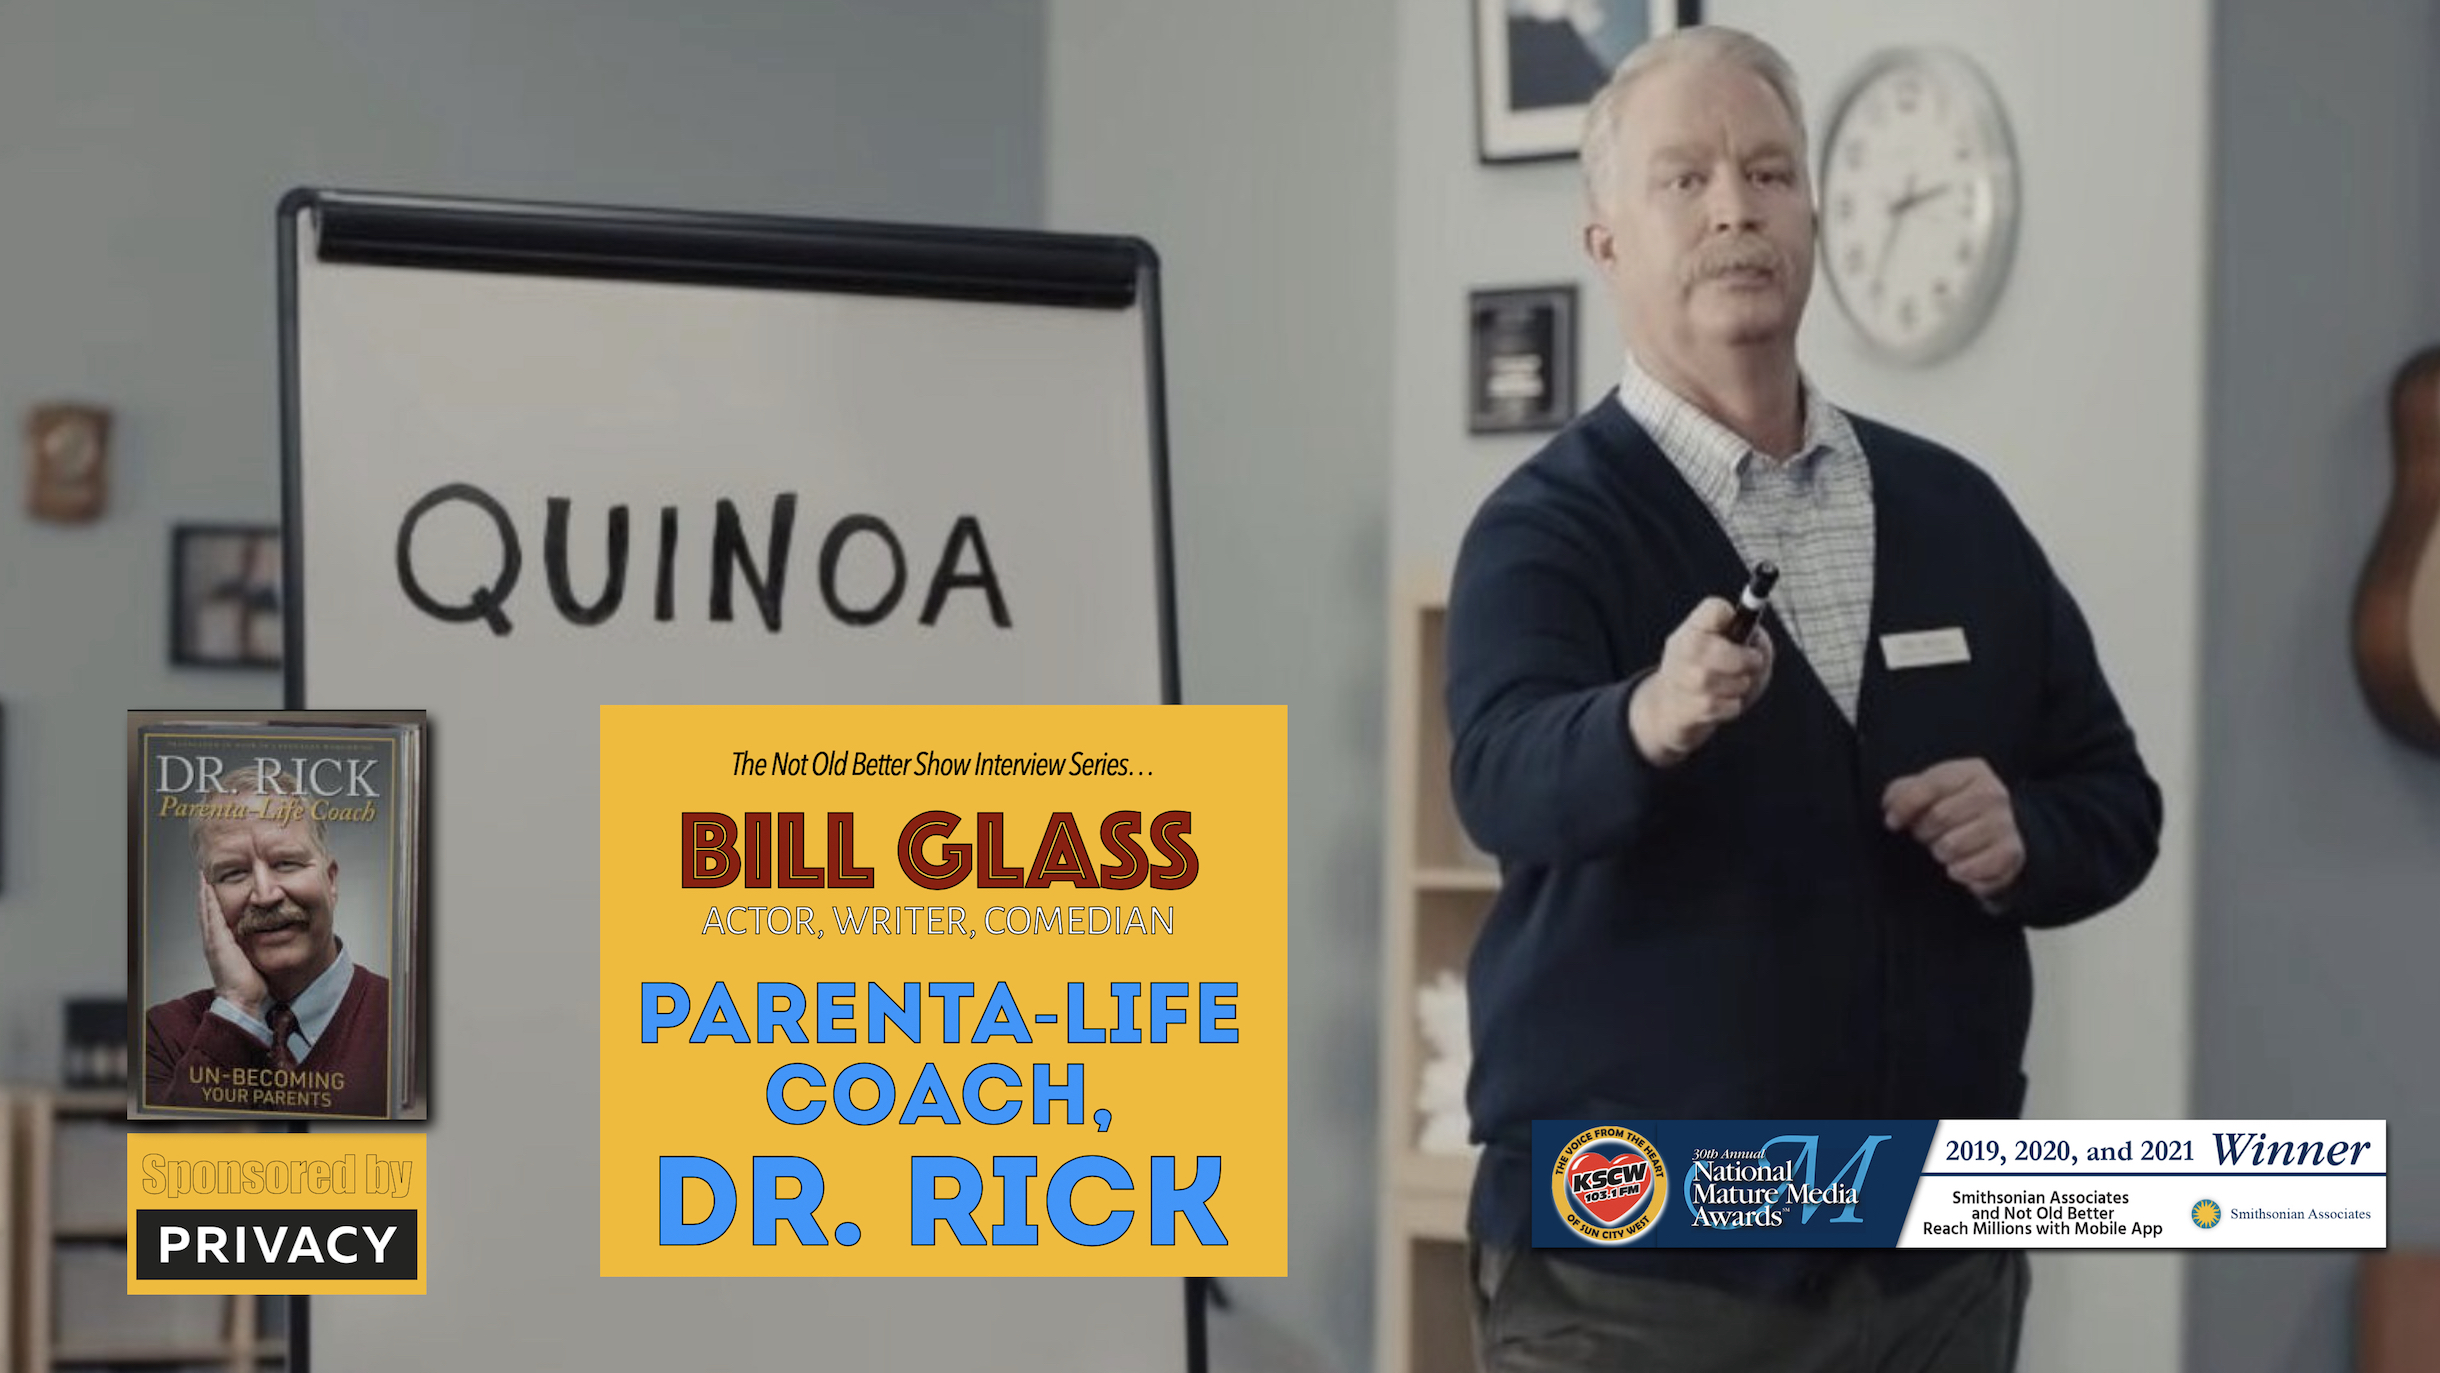 Bill Glass – Progressive Parenta-Life Coach